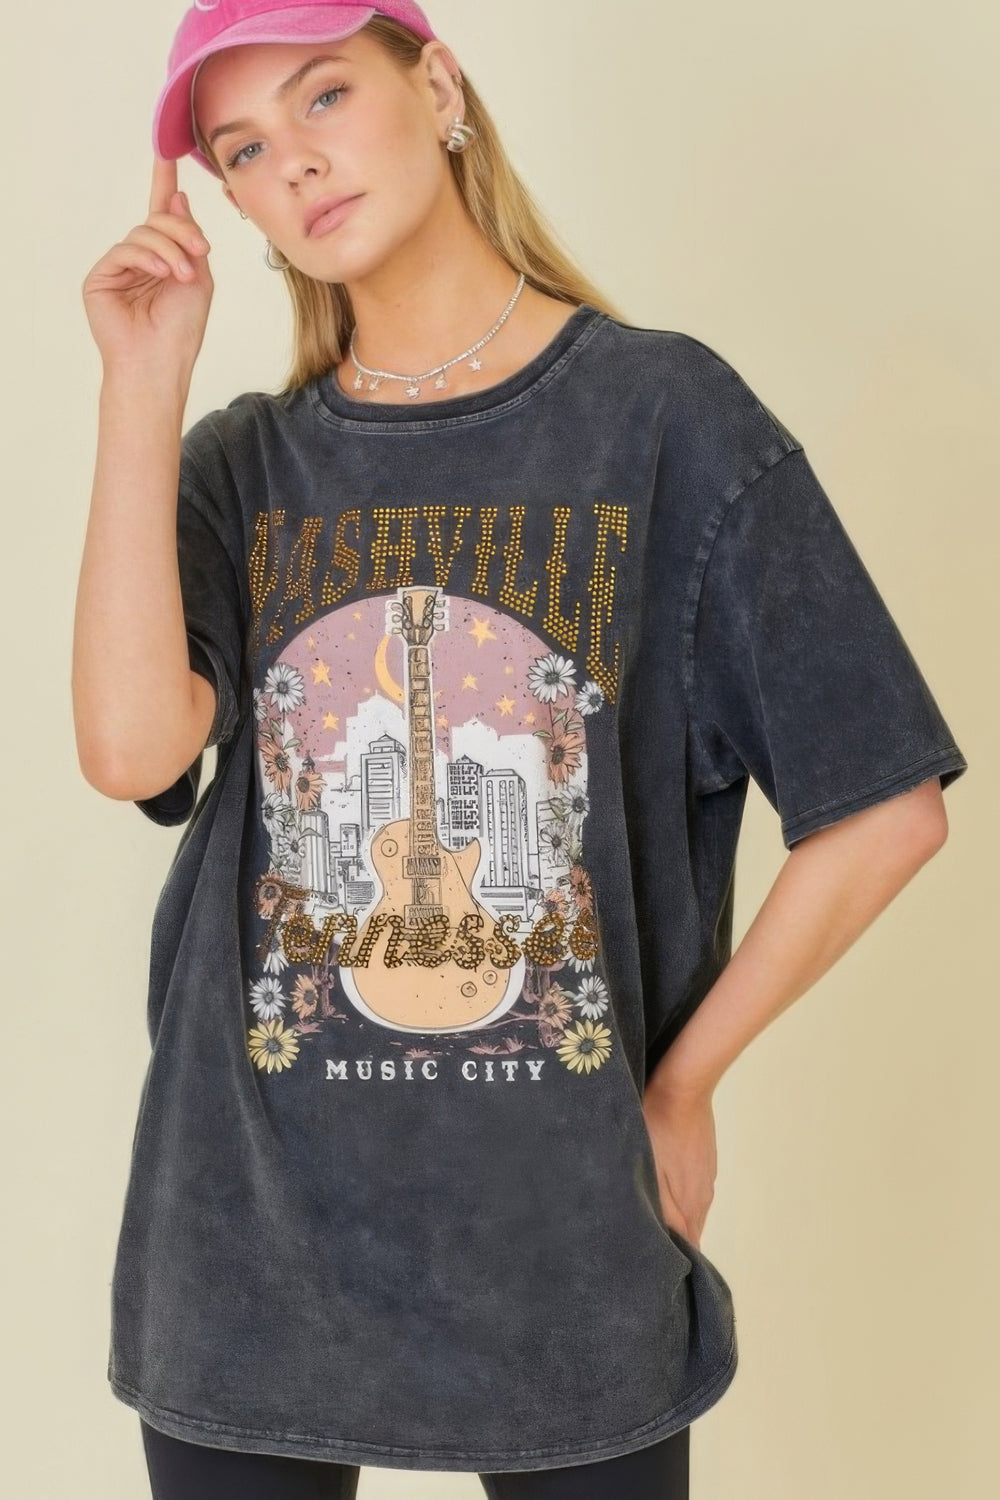 Washing Nashville Music City Graphic T-shirts - bertofonsi